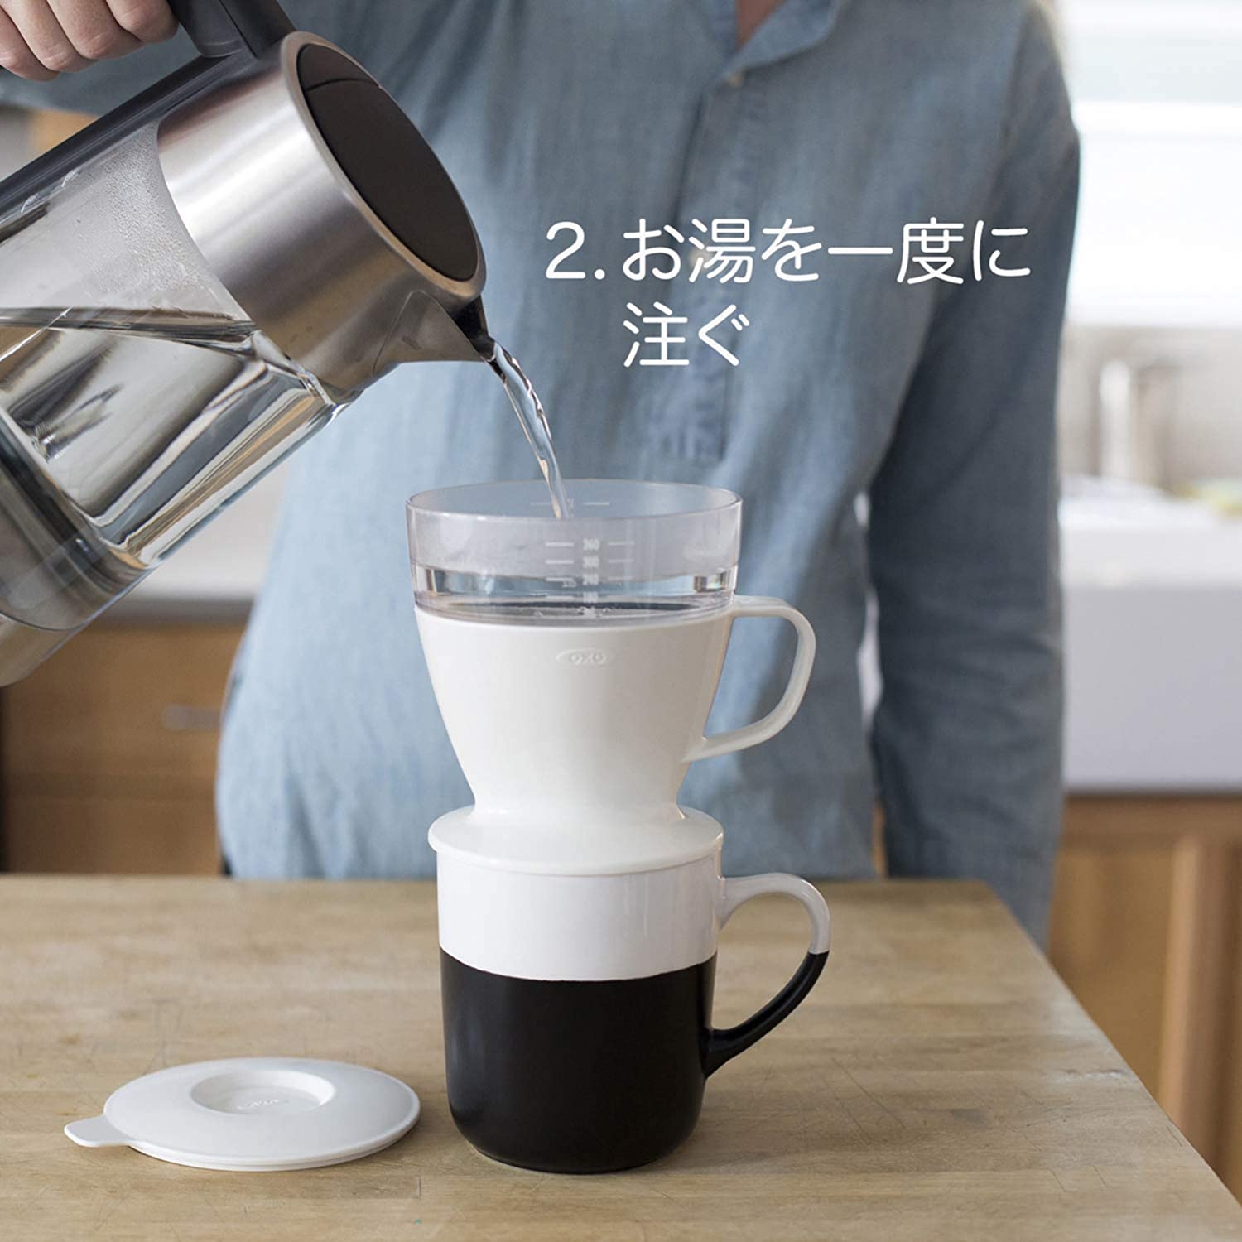 OXO(オクソー) オートドリップコーヒーメーカー 11180100の商品画像4 